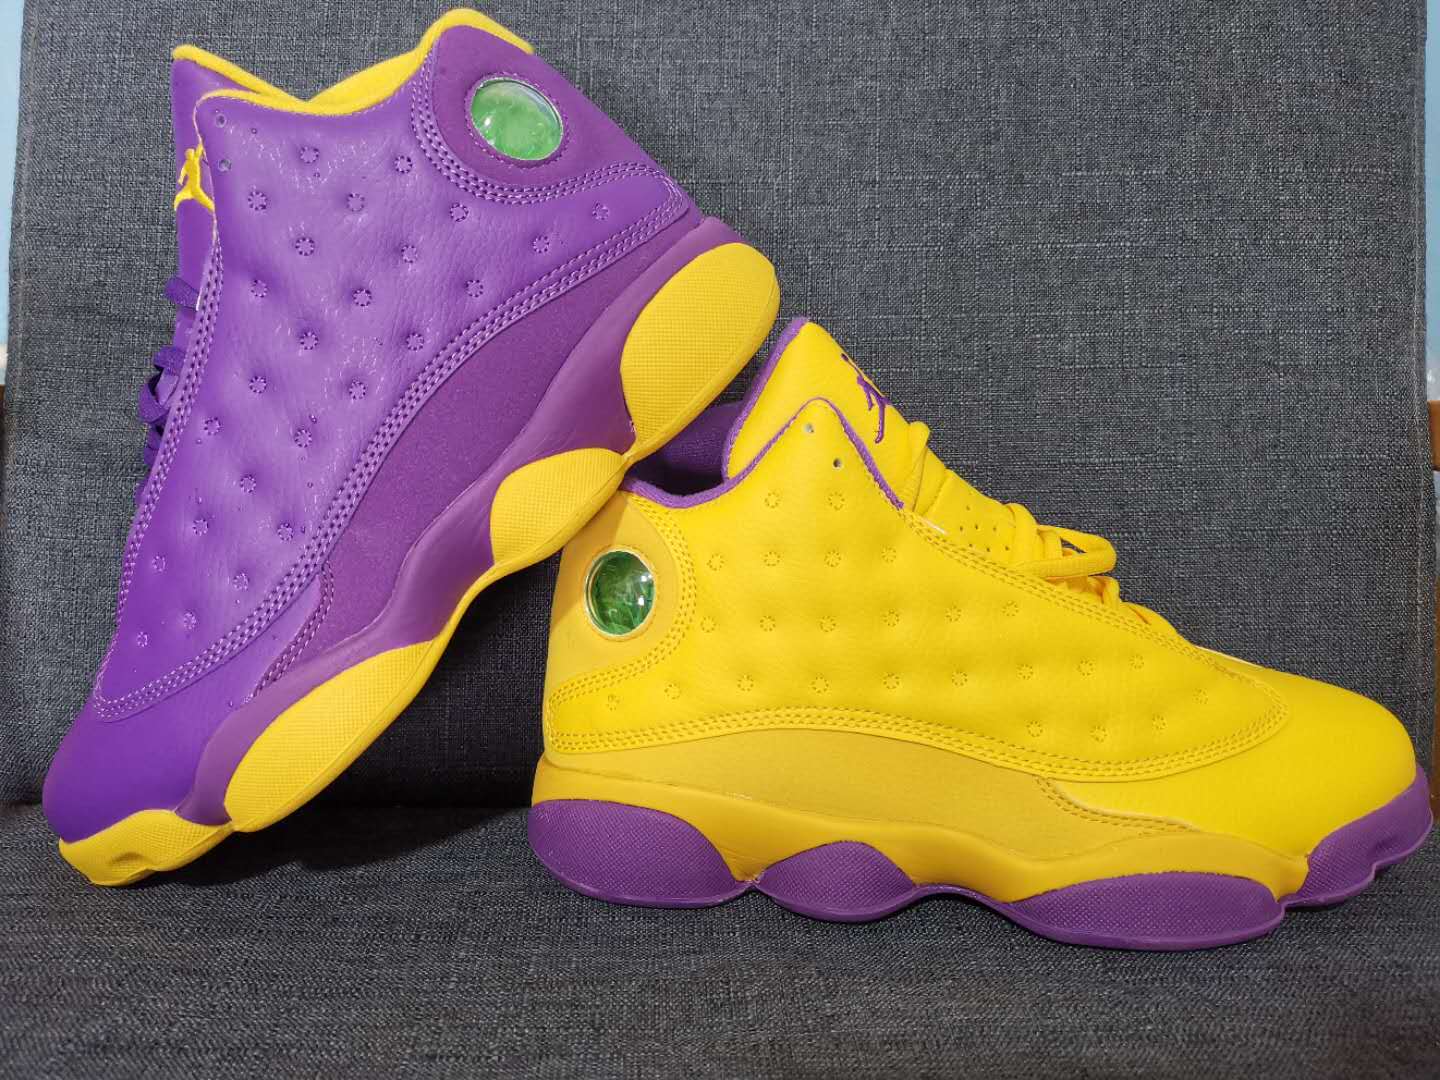 purple & yellow jordans